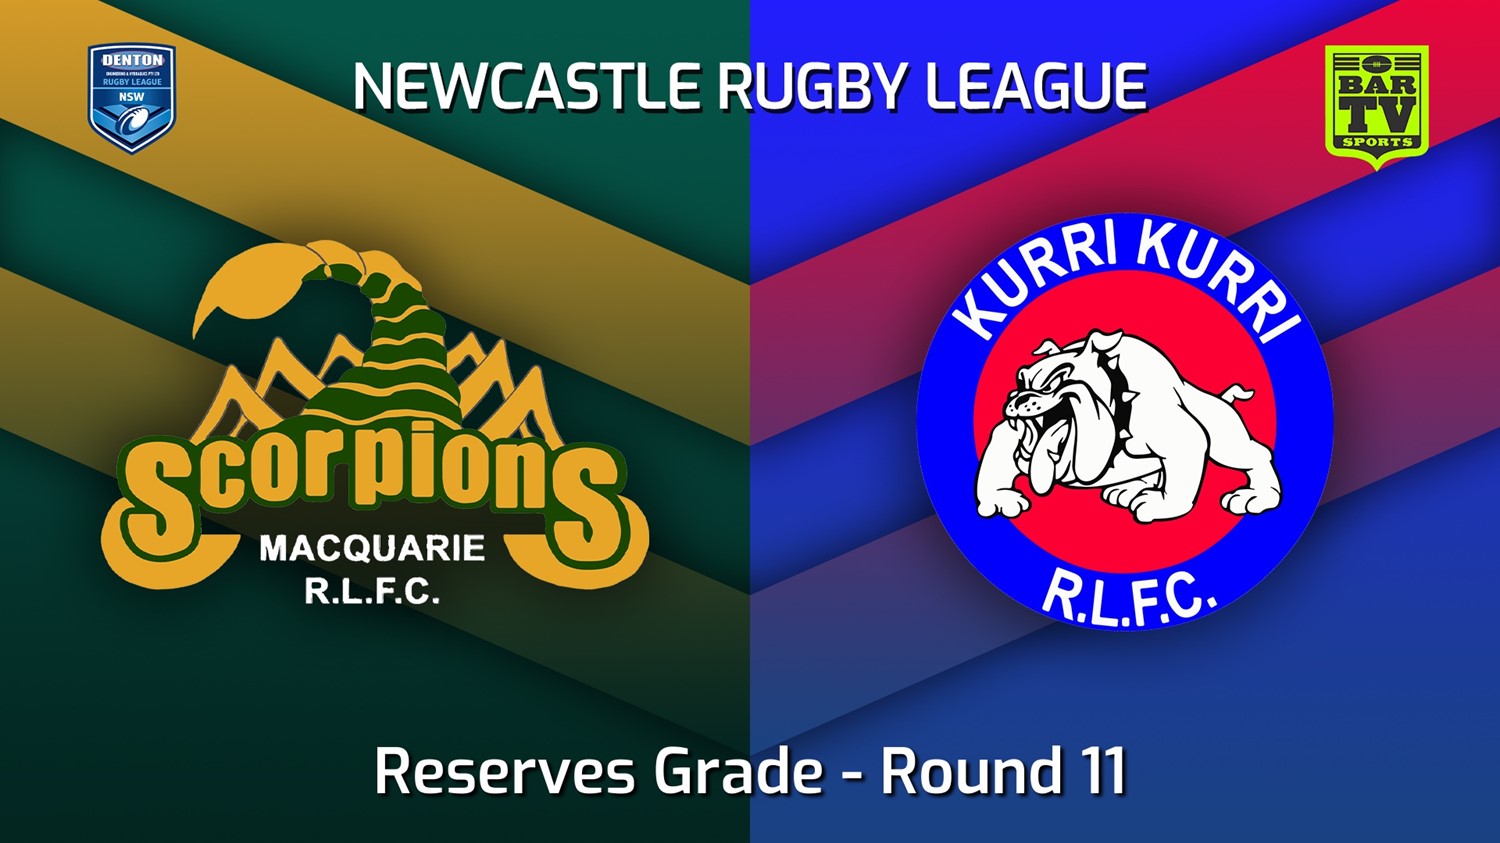 220612-Newcastle Round 11 - Reserves Grade - Macquarie Scorpions v Kurri Kurri Bulldogs Slate Image